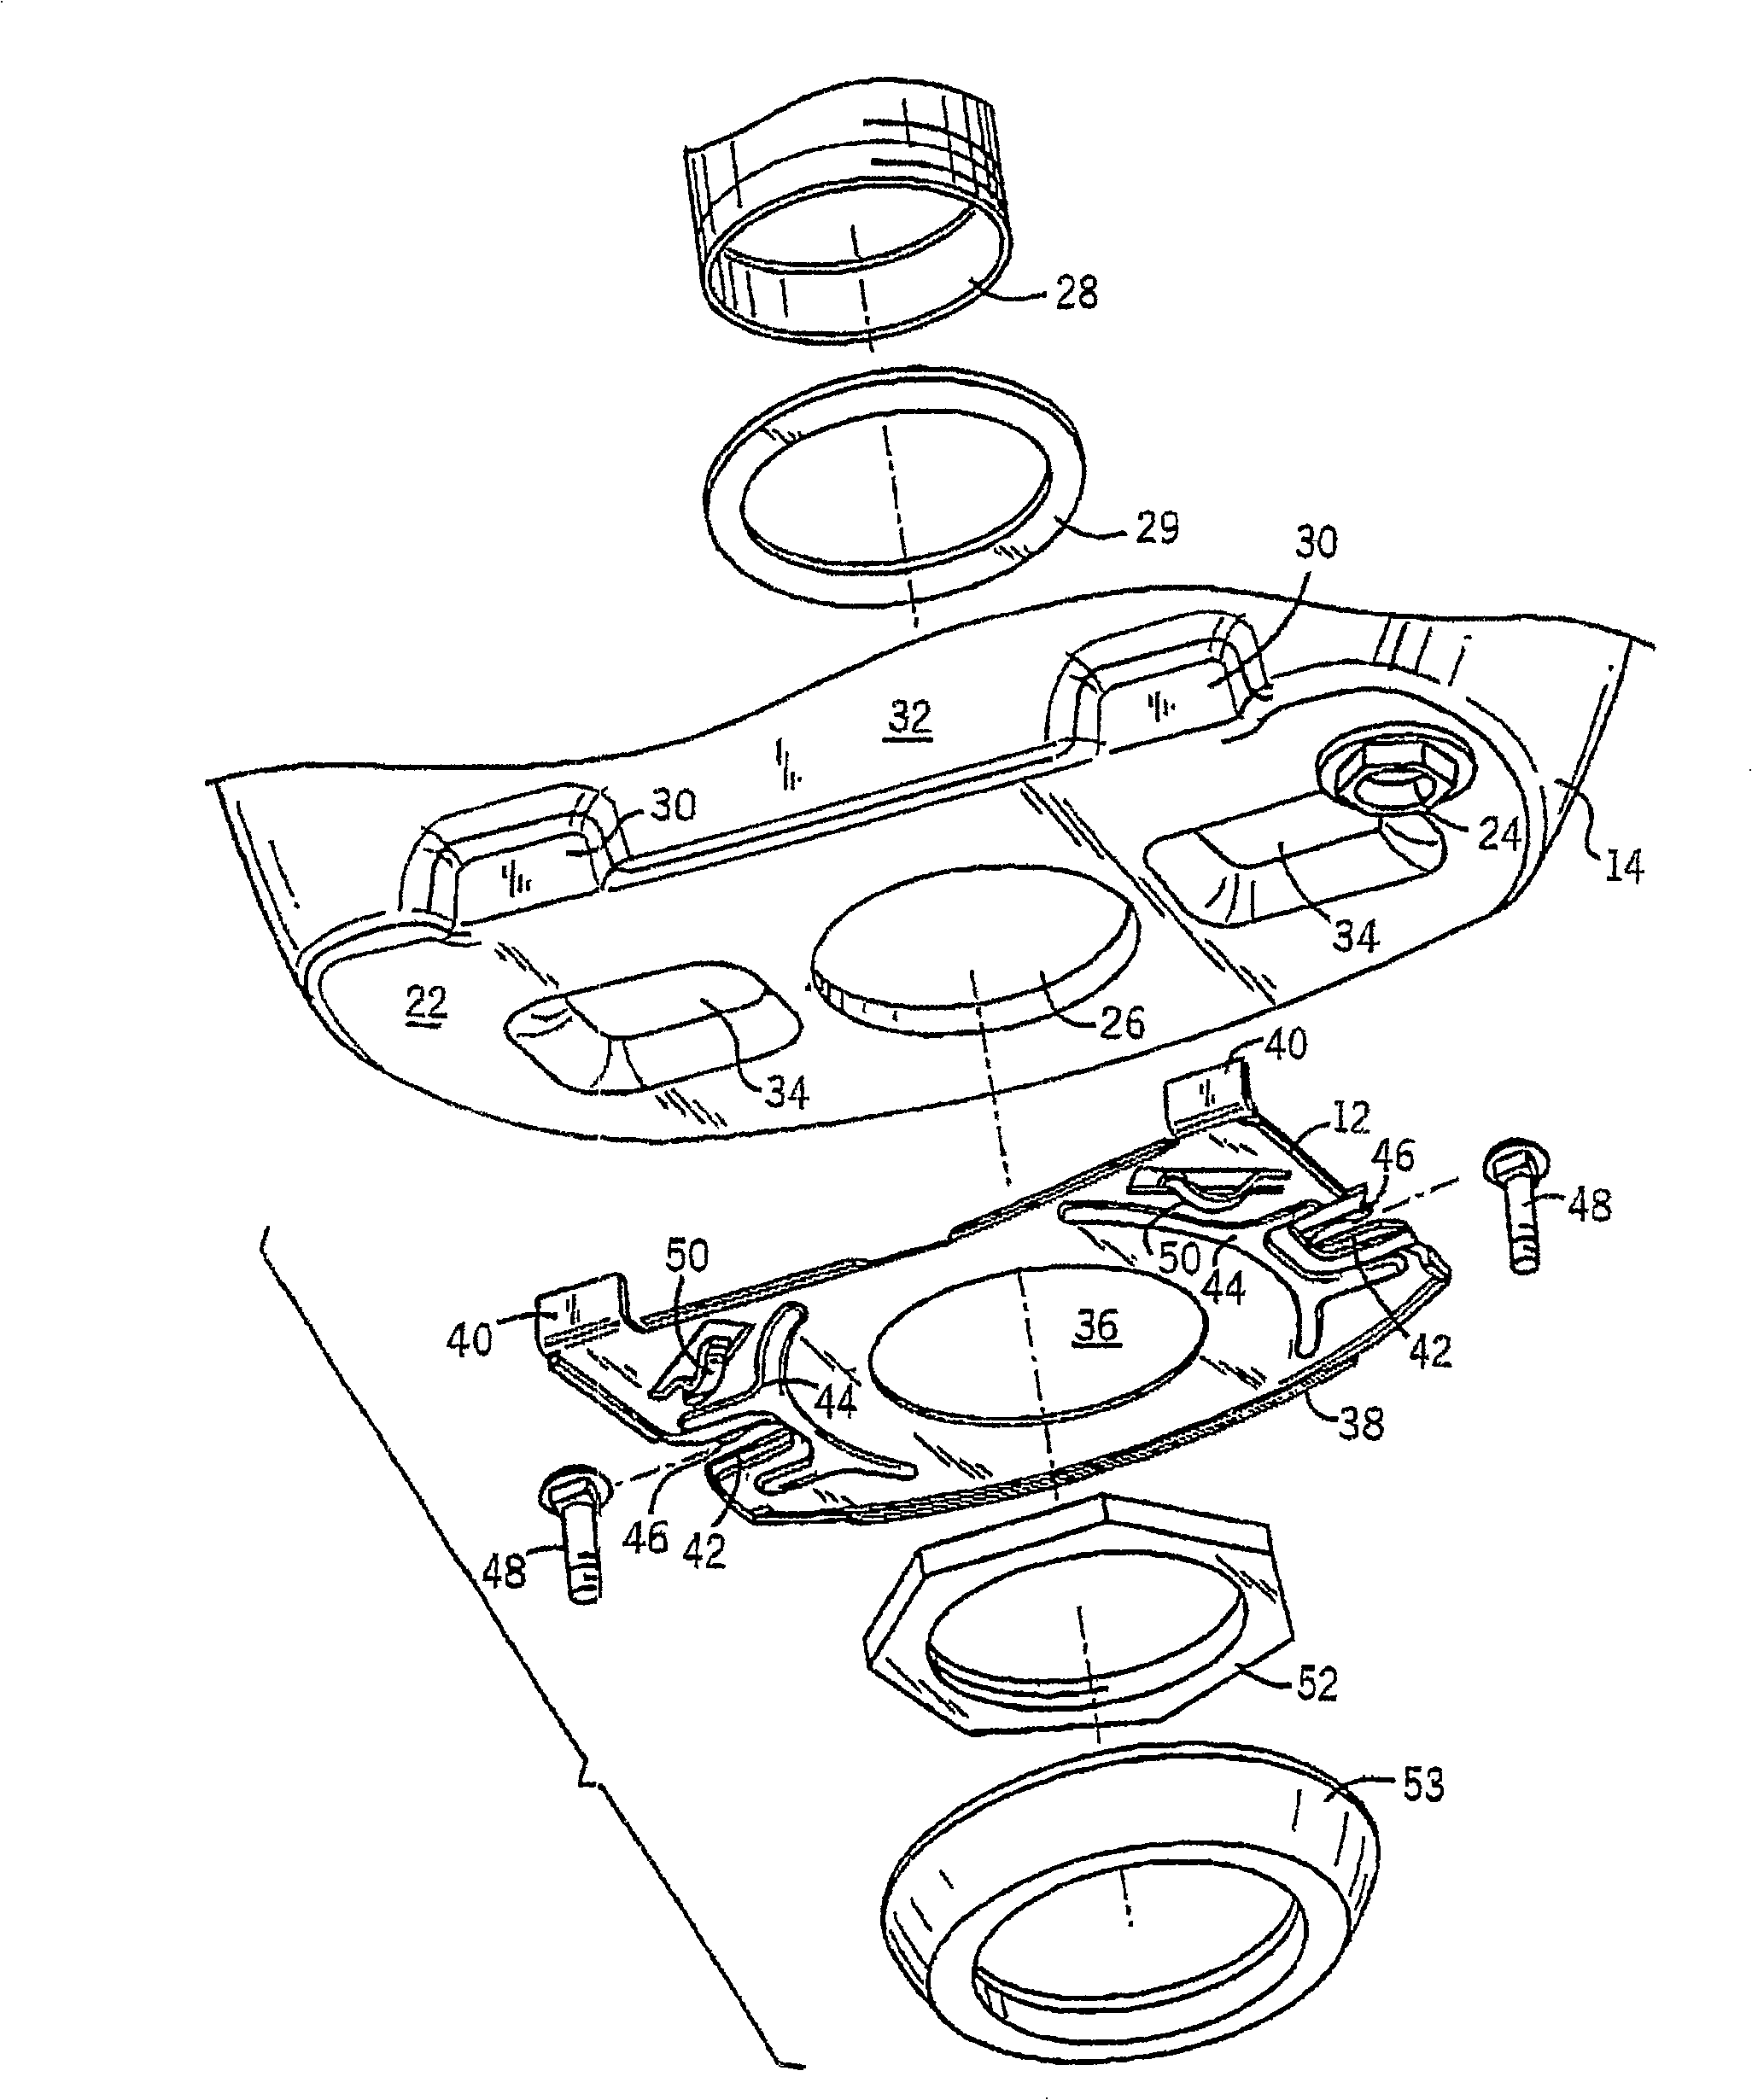 Toilet tank attachment bracket with unitary spring arm